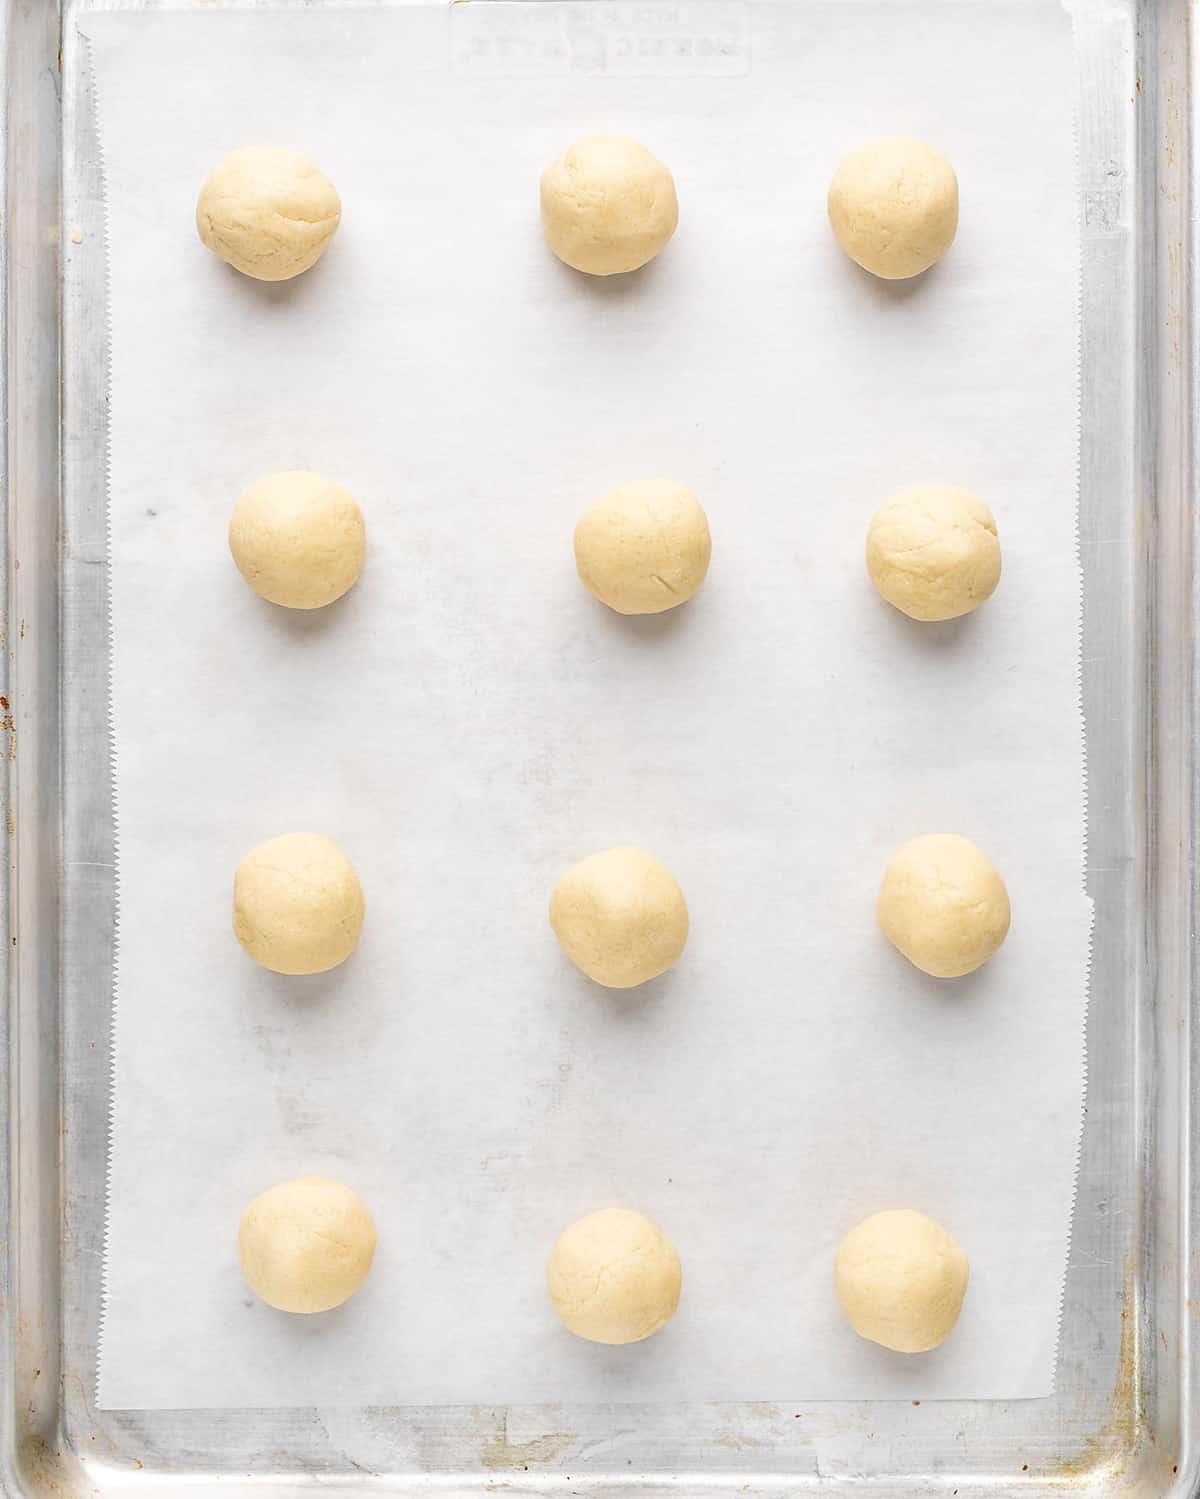 12 round balls of dough on a baking sheet